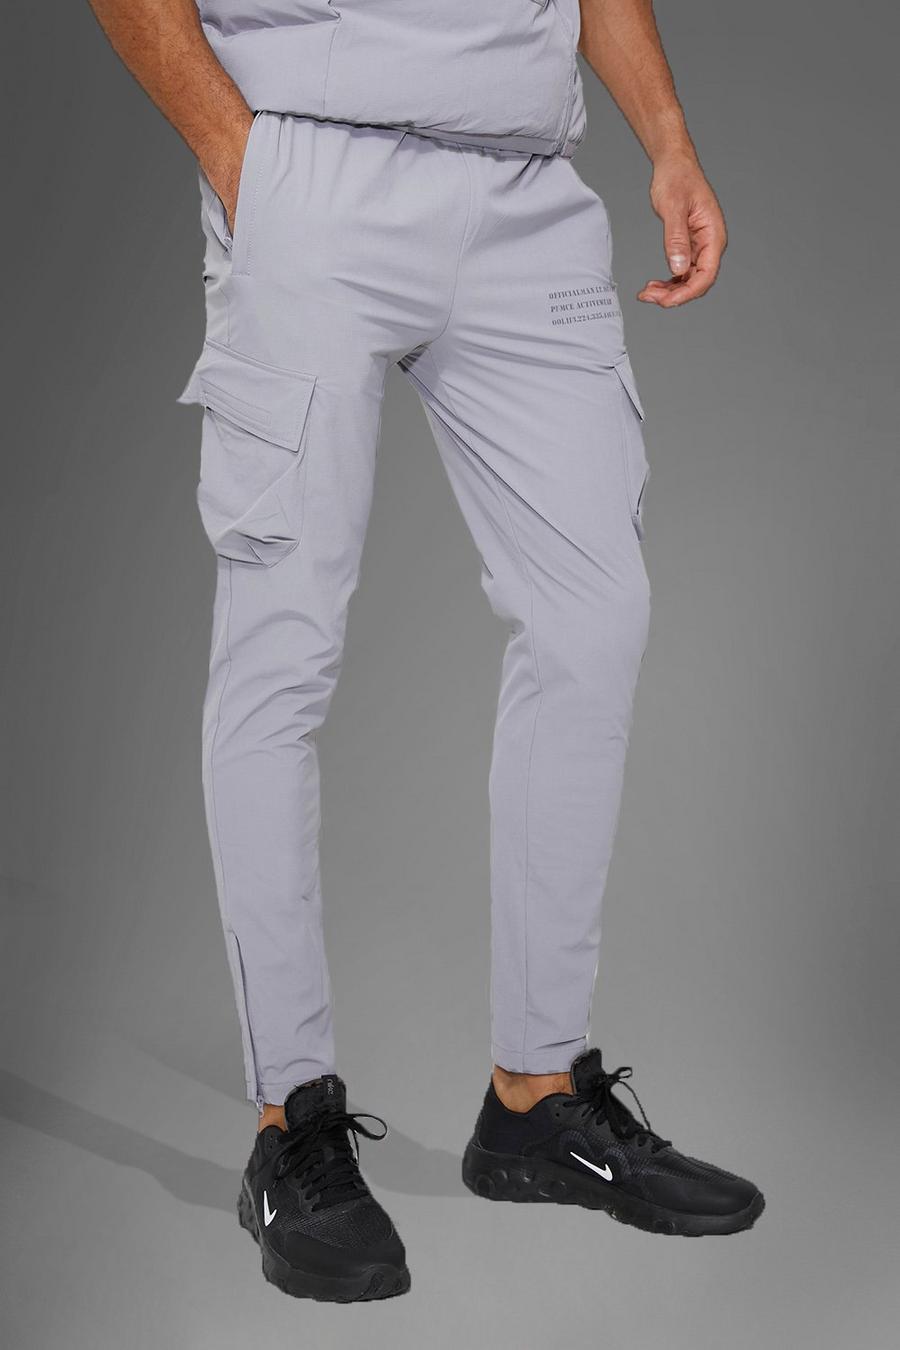 Pantaloni tuta Man Active Gym tecnici stile Cargo, Light grey gris